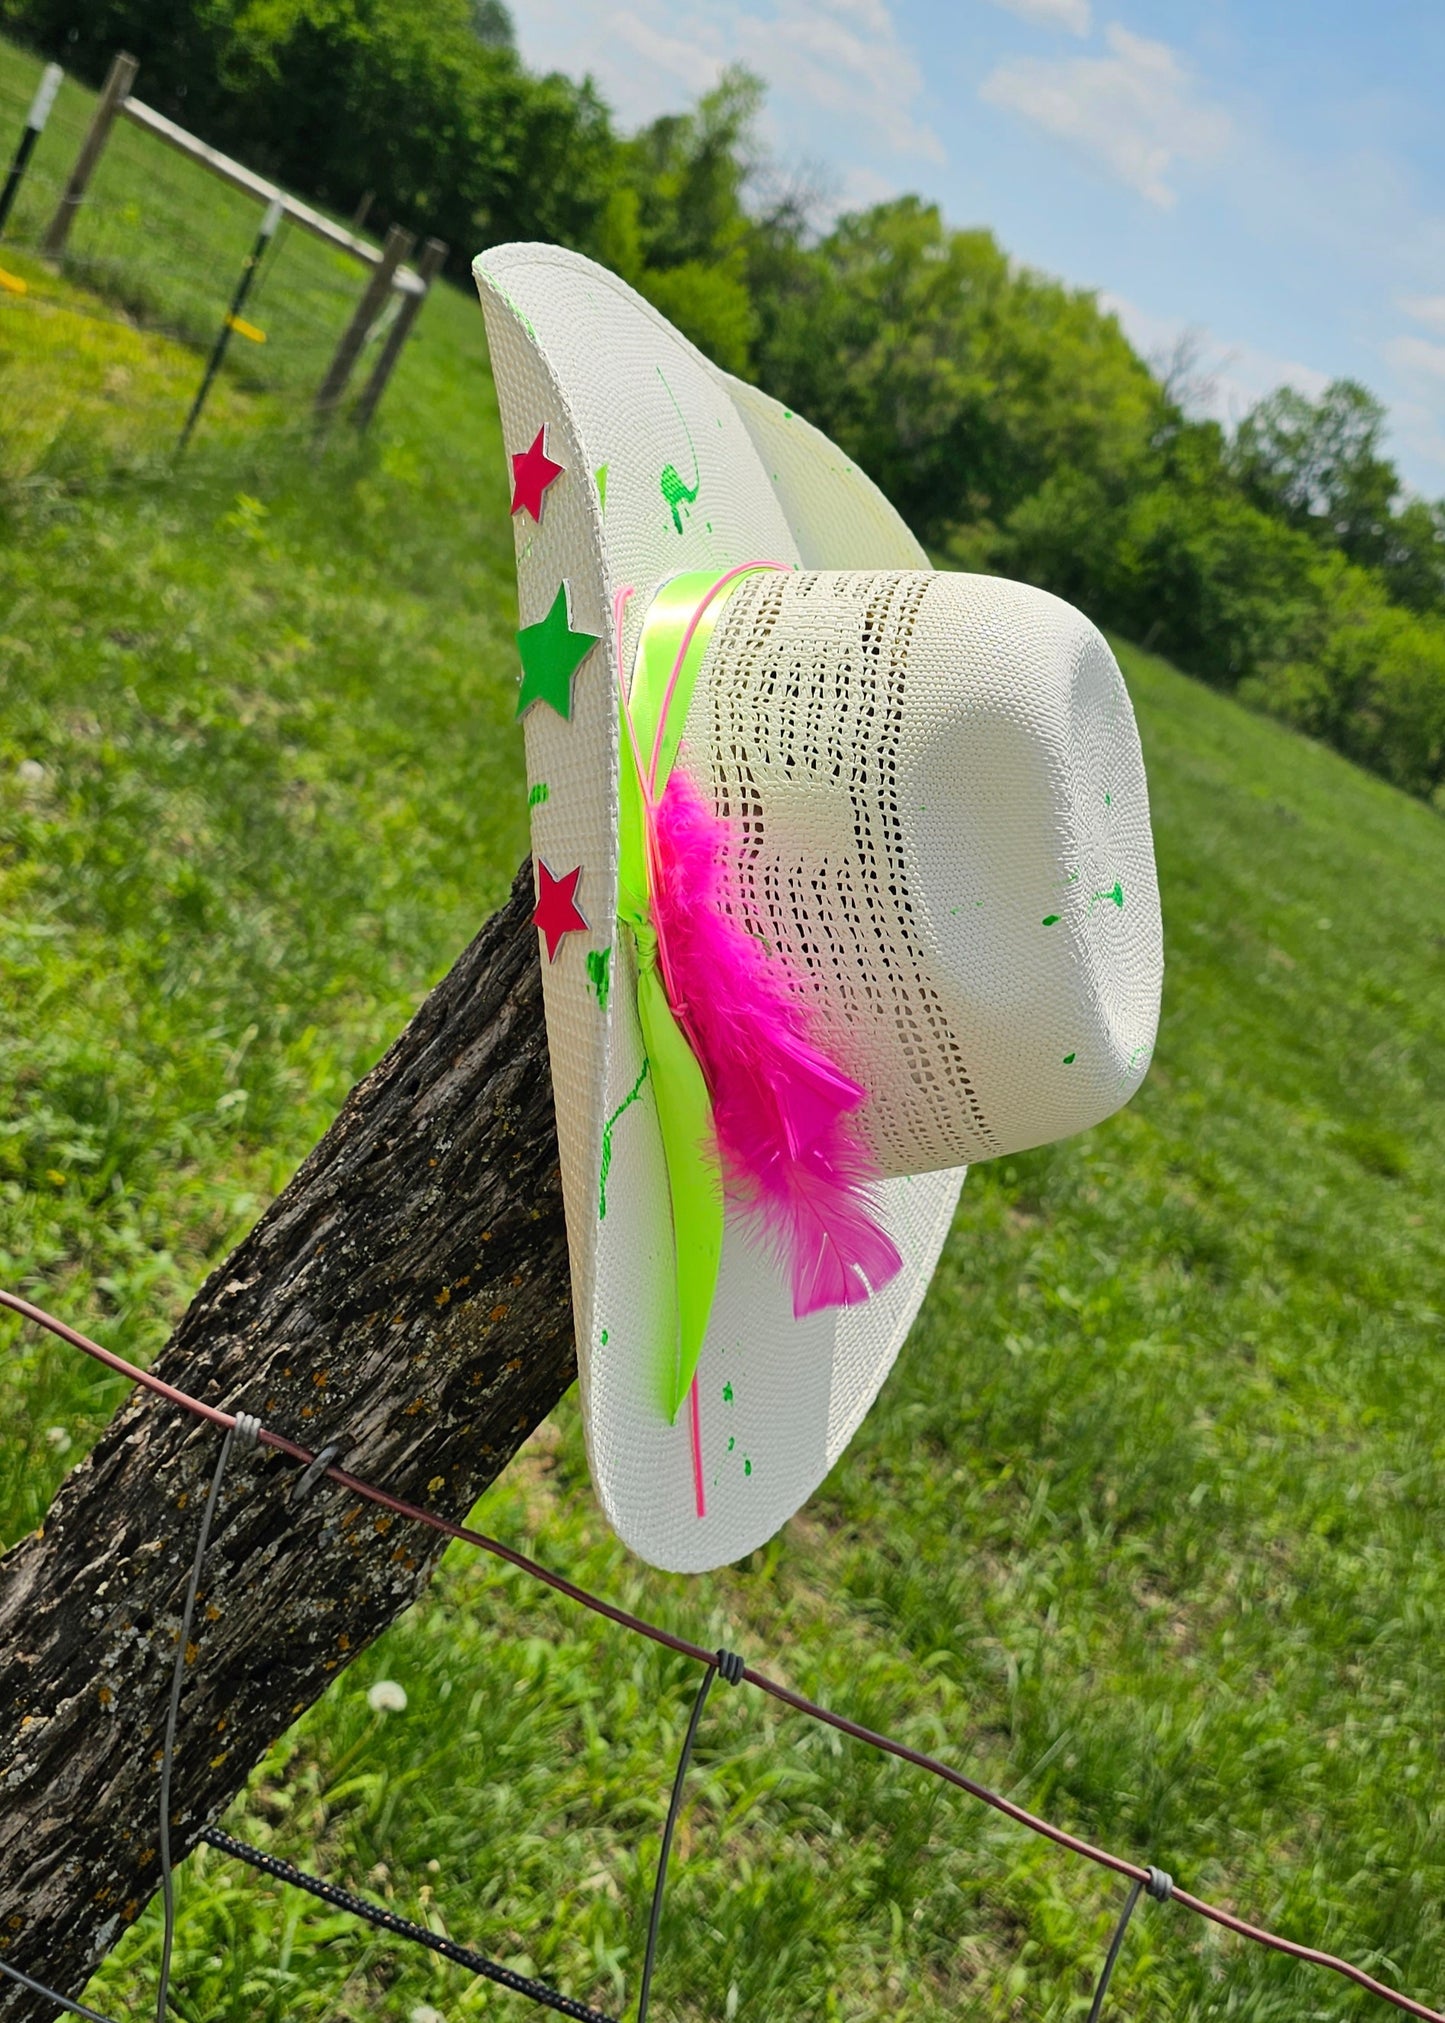 Neon Paint Splatter & Stars Straw Hat size 7 1/8